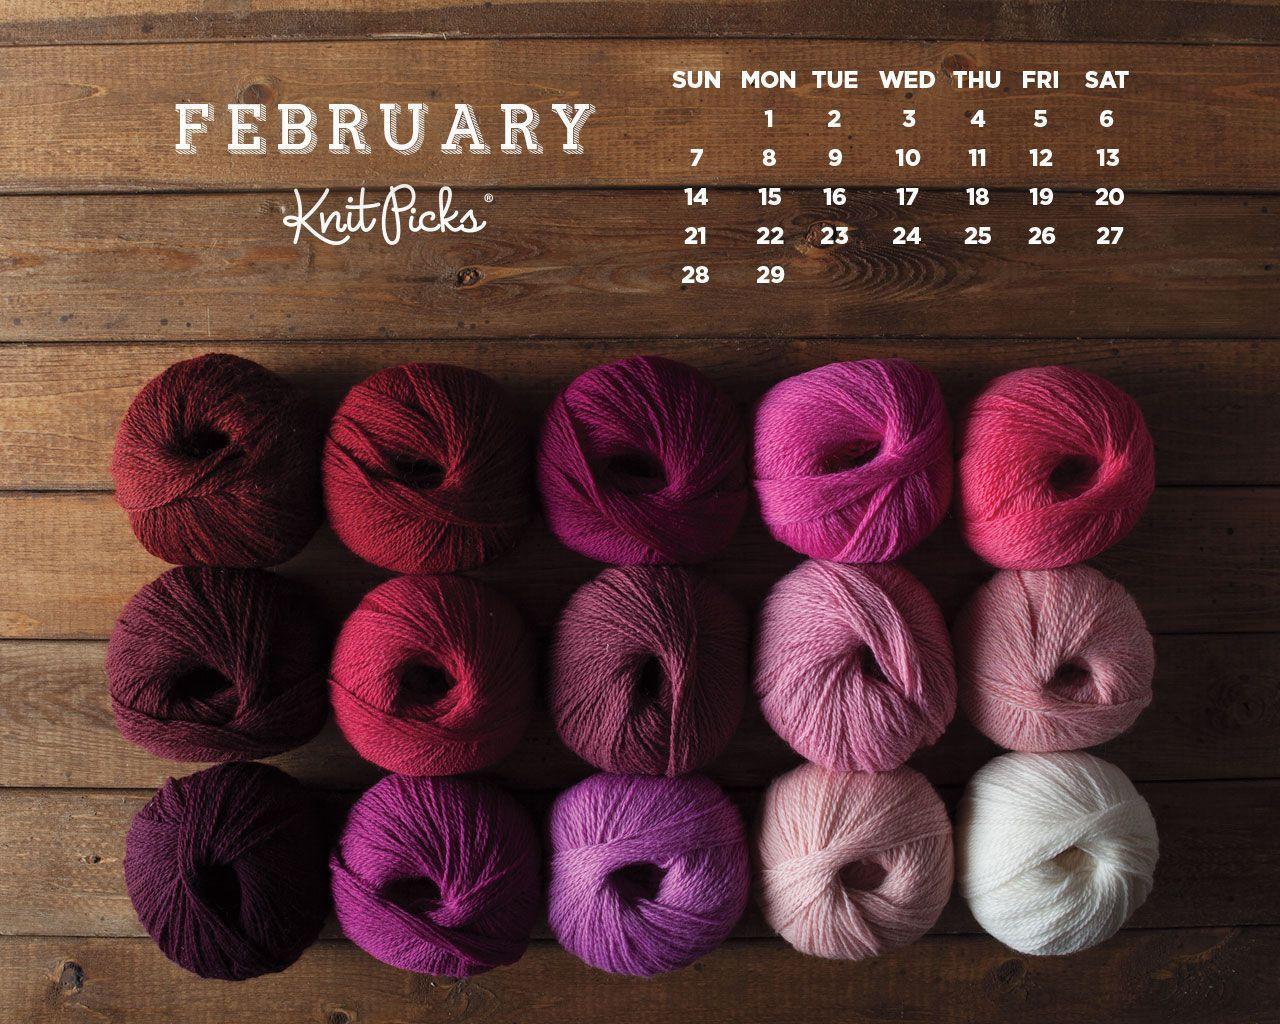 February 2016 Calendar Staff Knitting Blog